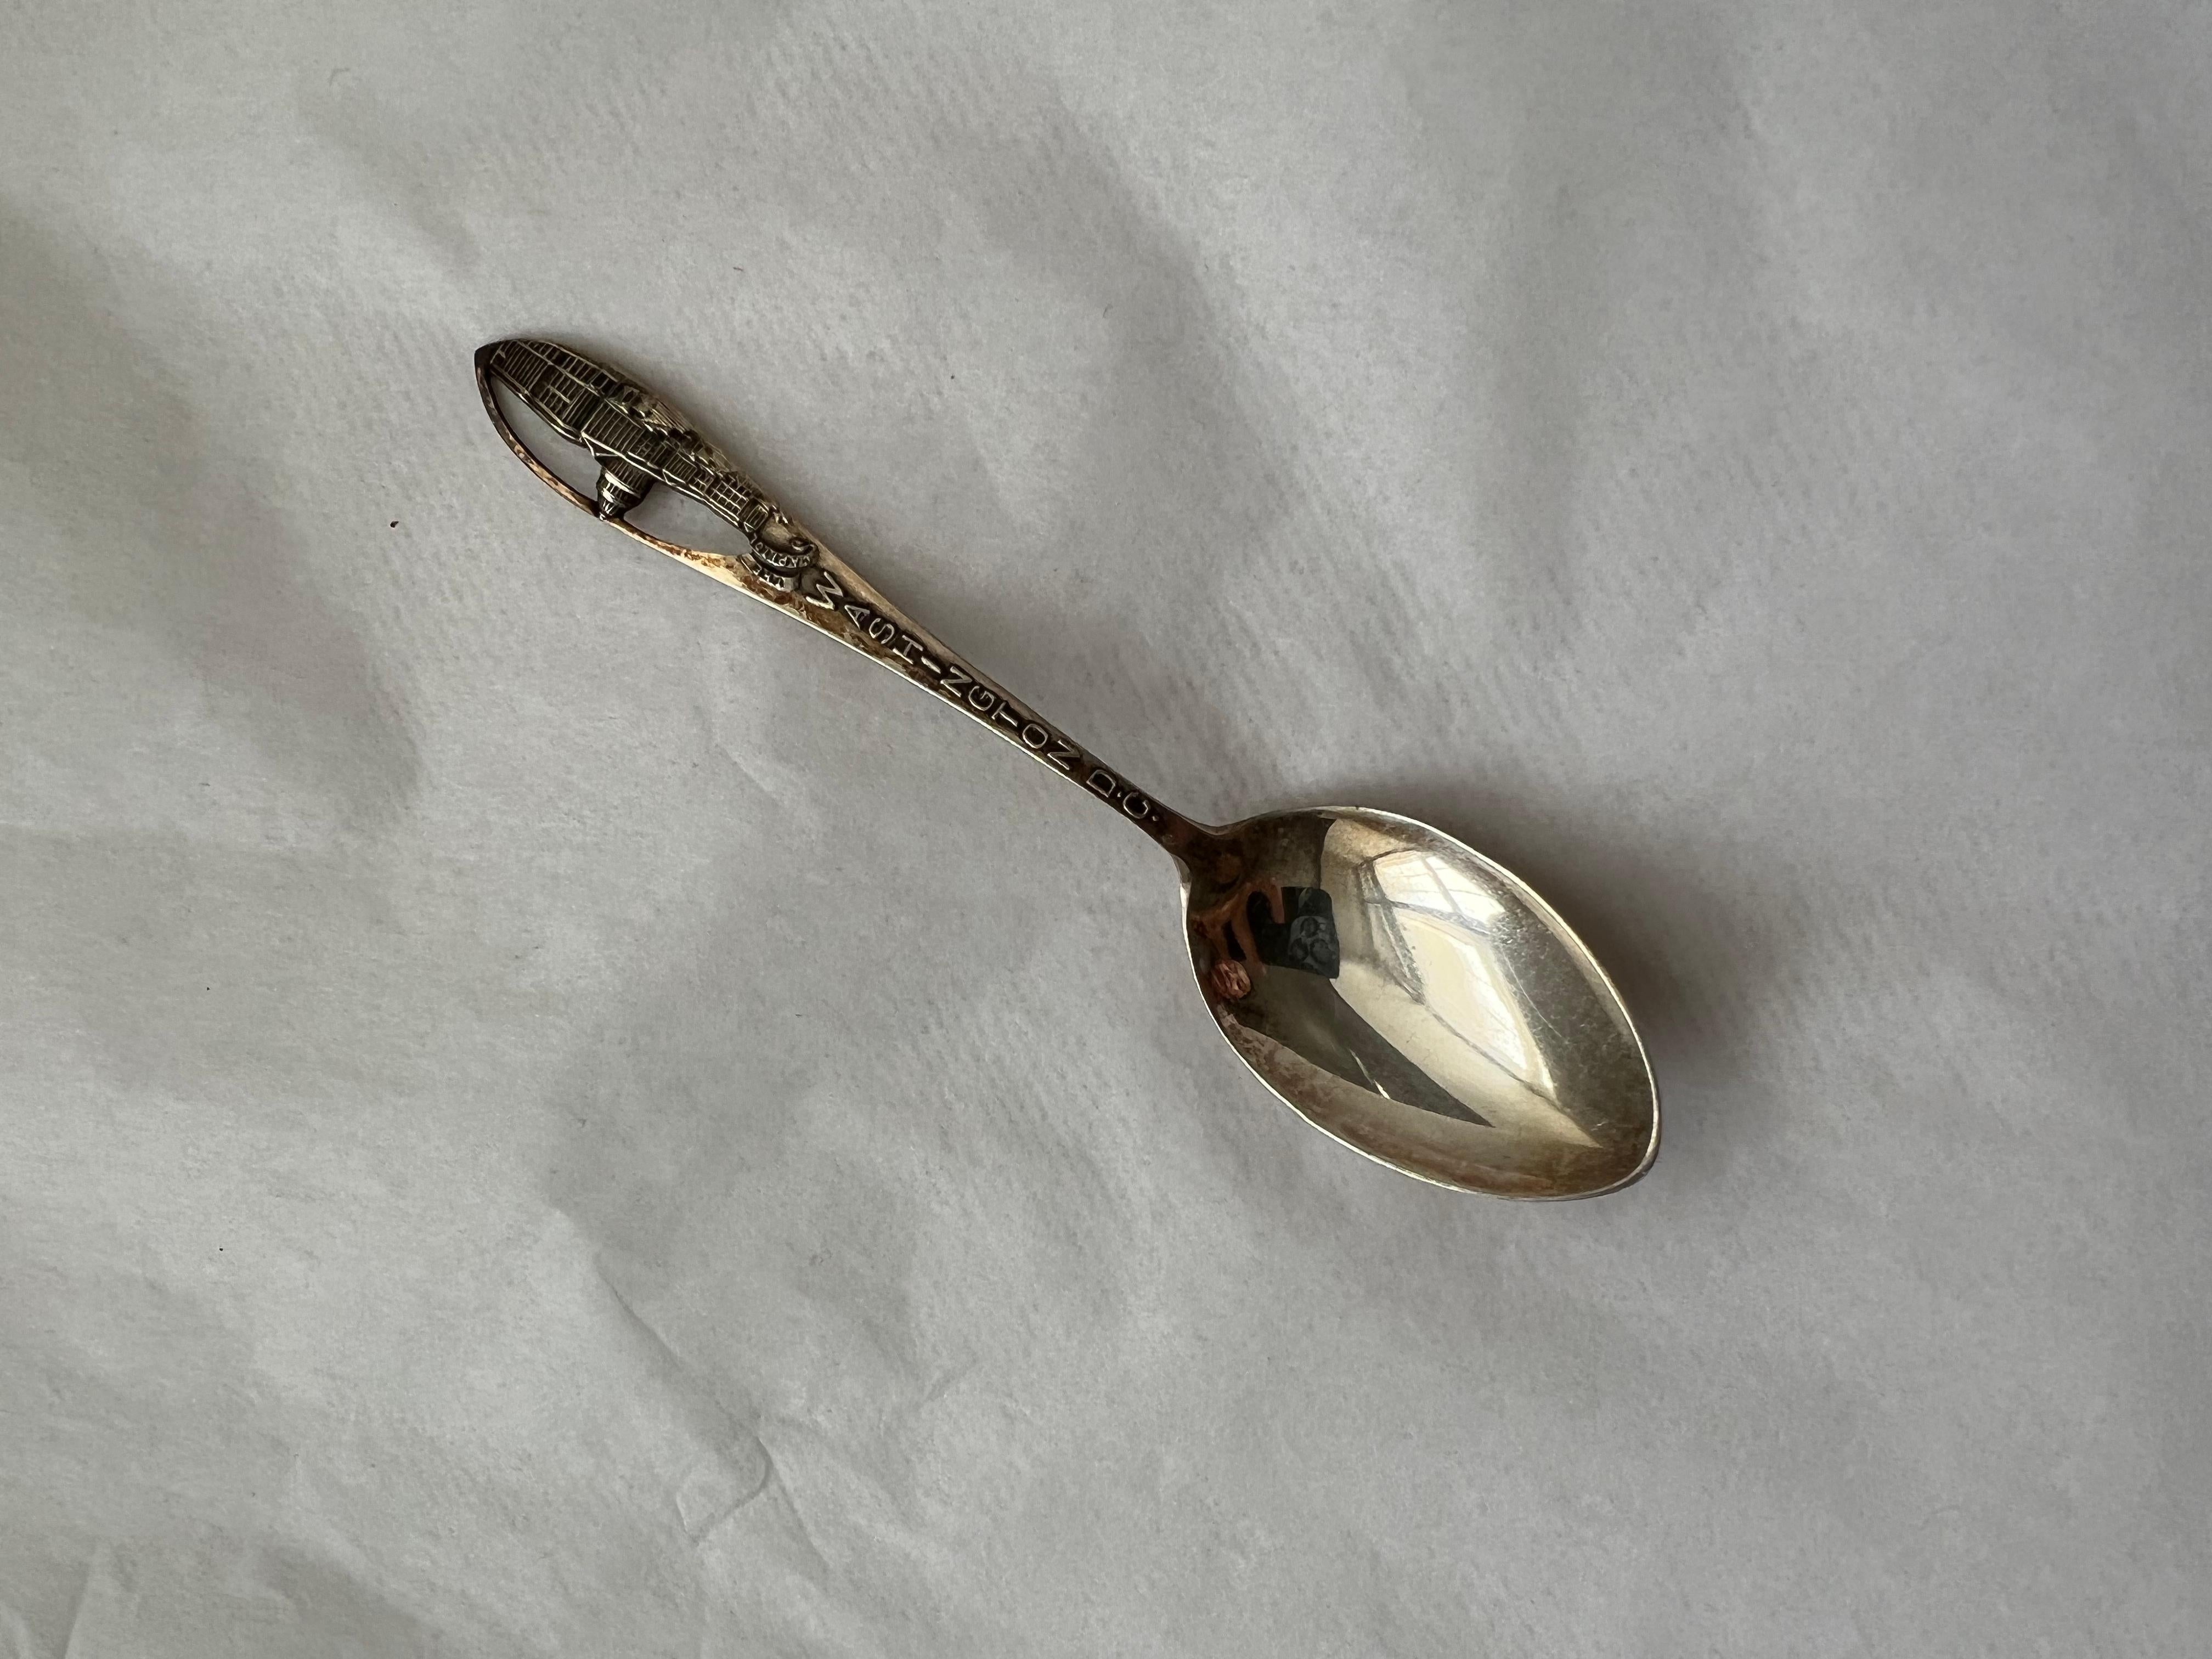 spoon symbolism